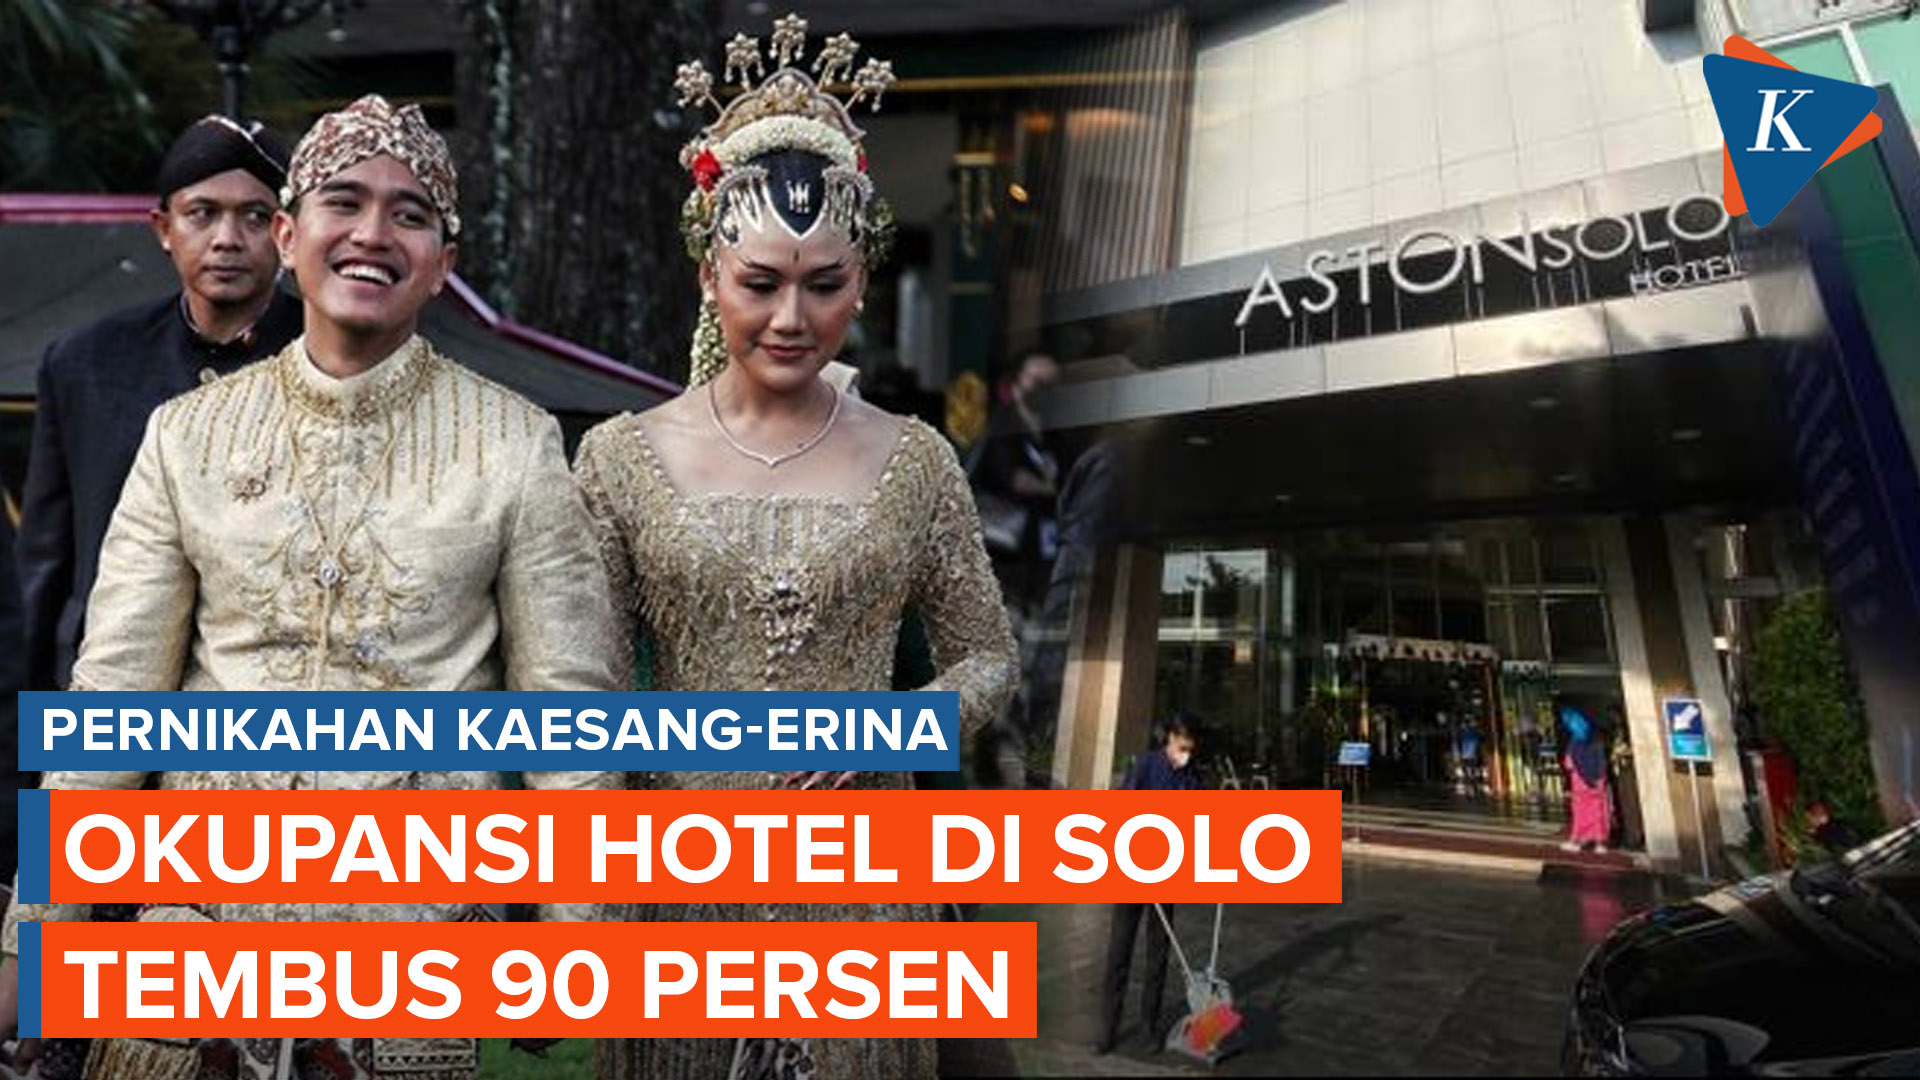 Pernikahan Kaesang-Erina di Surakarta, Okupansi Hotel di Solo Raya Tembus 90 Persen